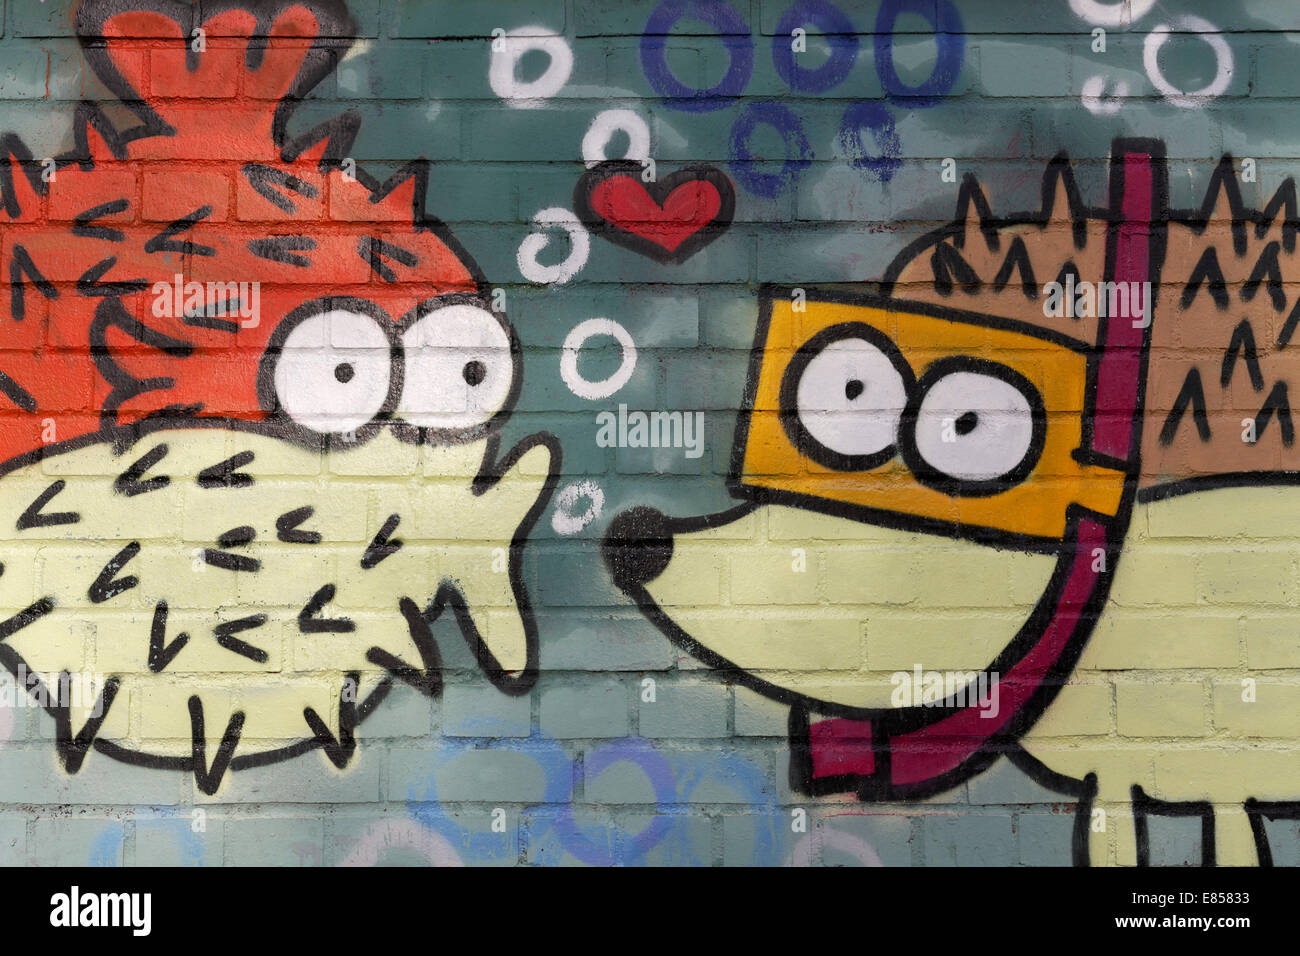 Spiny fish figure kissing a hedgehog figure wearing goggles, mural, North Rhine-Westphalia, Germany Stock Photo